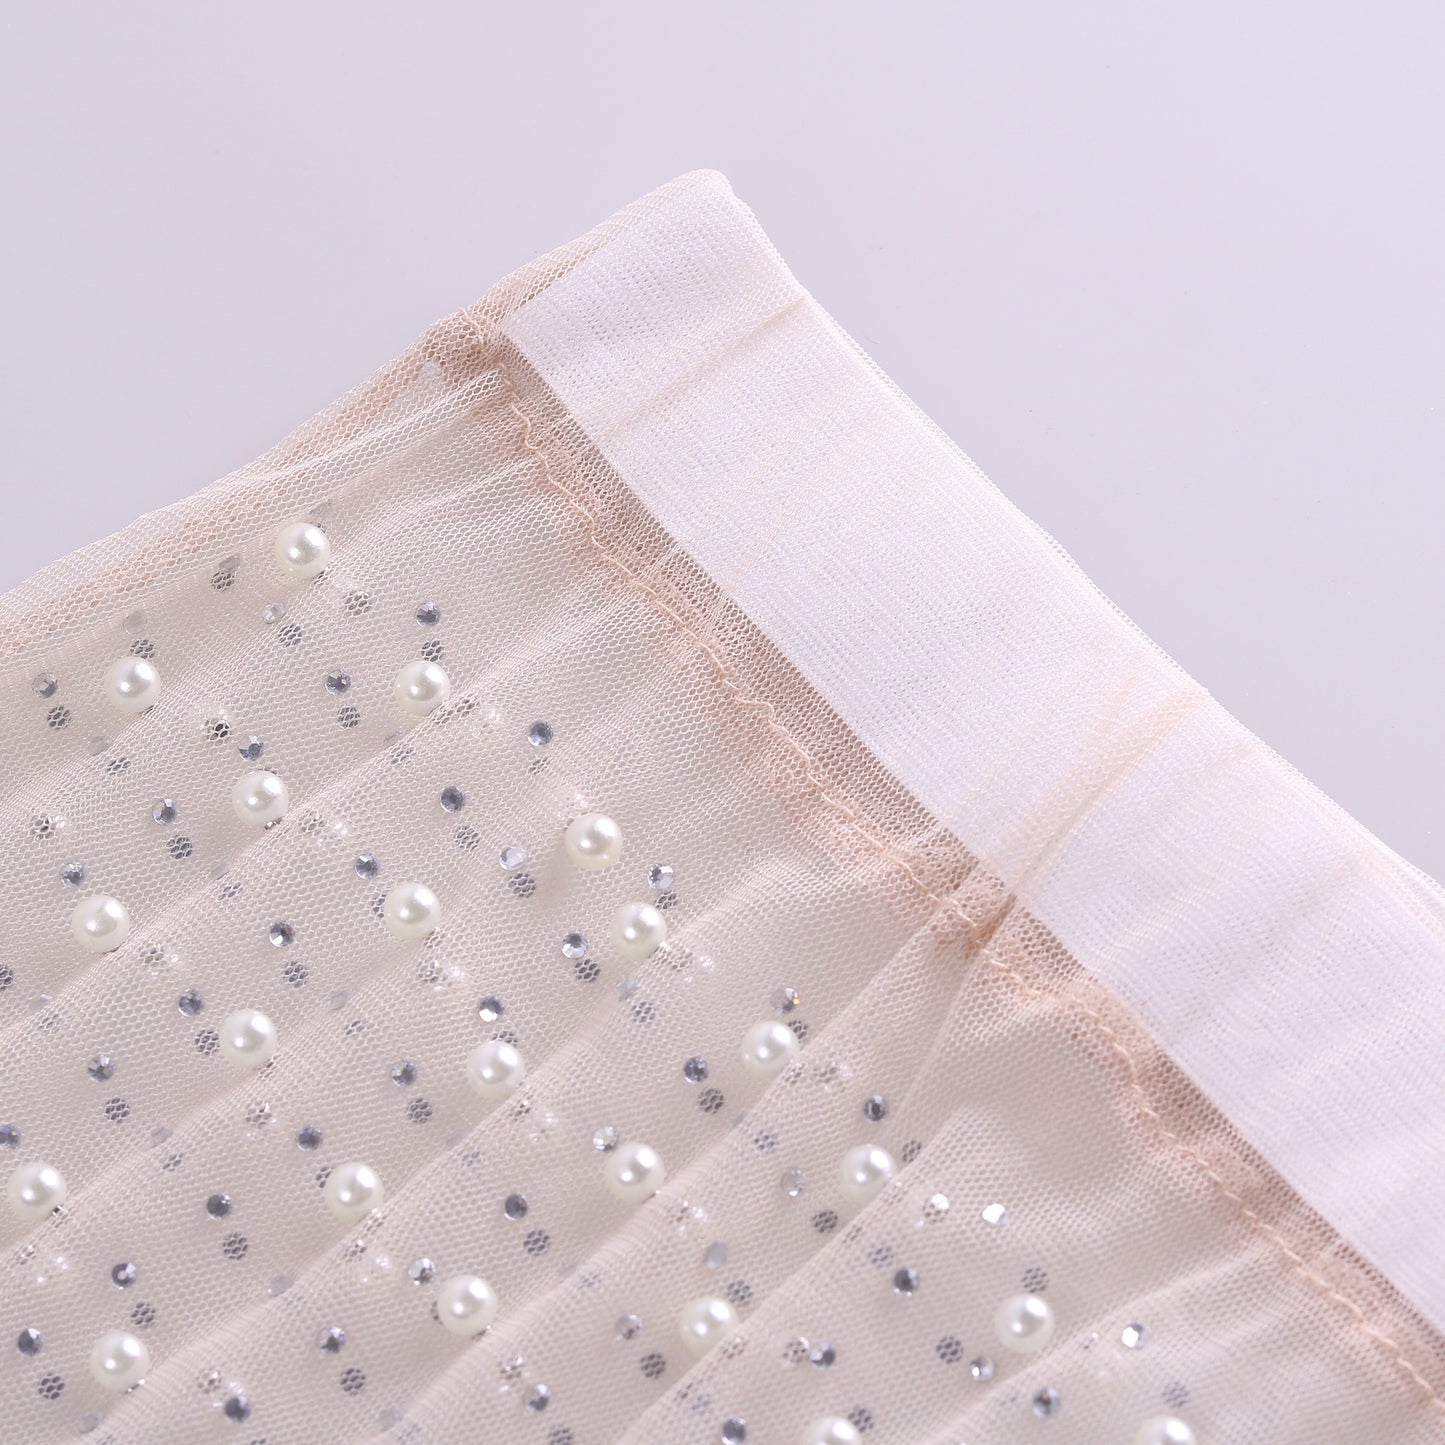 Mesh Diamond Beads Crop Top & Skirt Sets